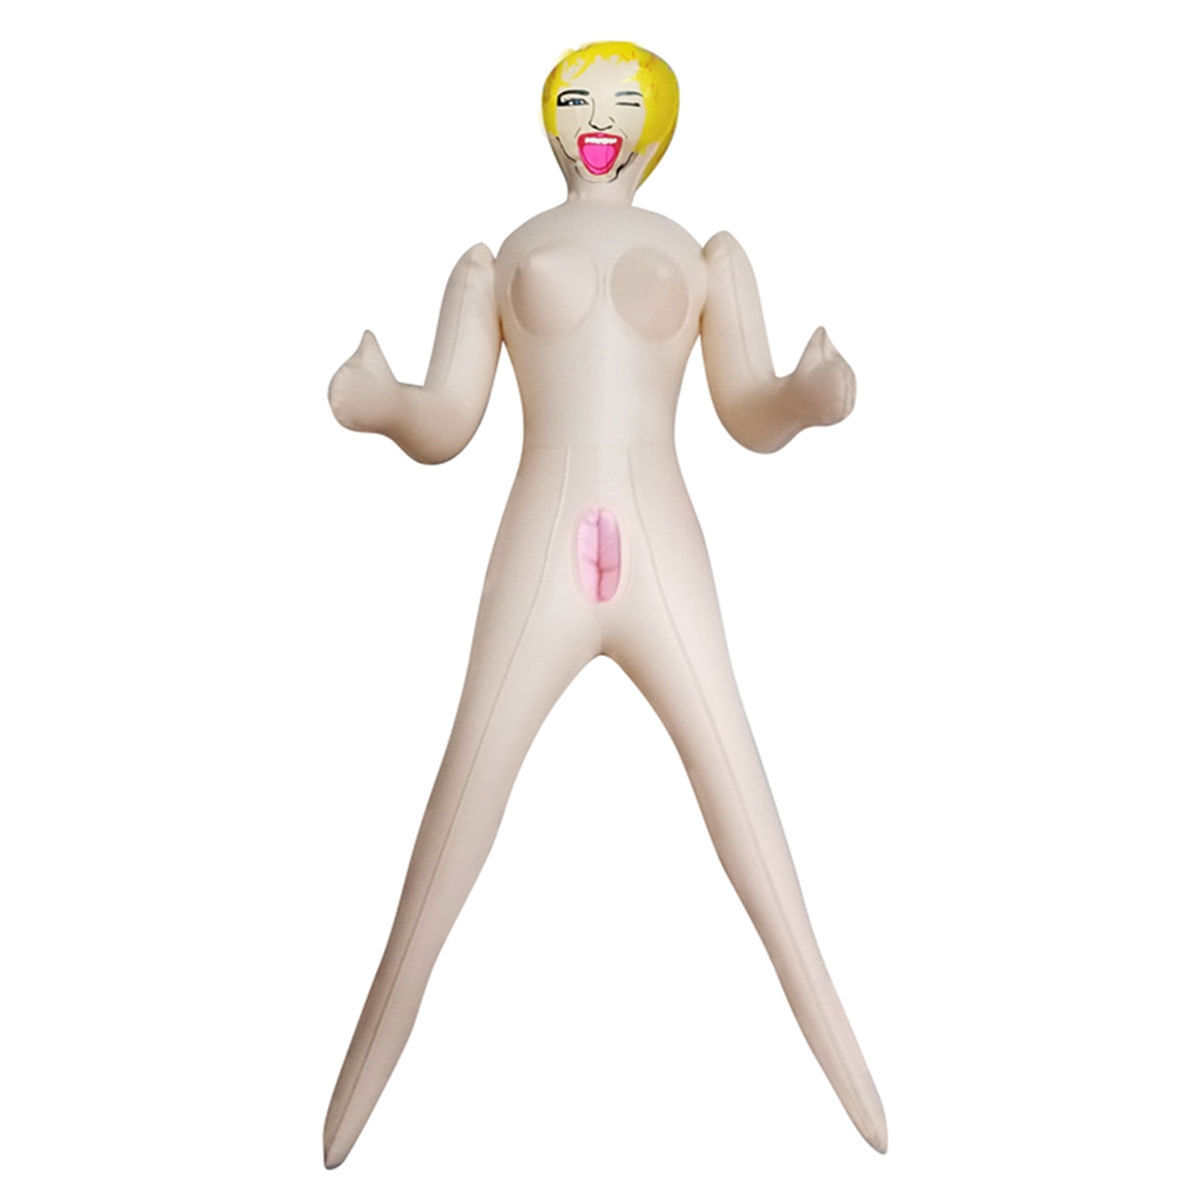 Boneca Inflável Mini Obesa com 2 Orifícios Penetráveis Miss Collection